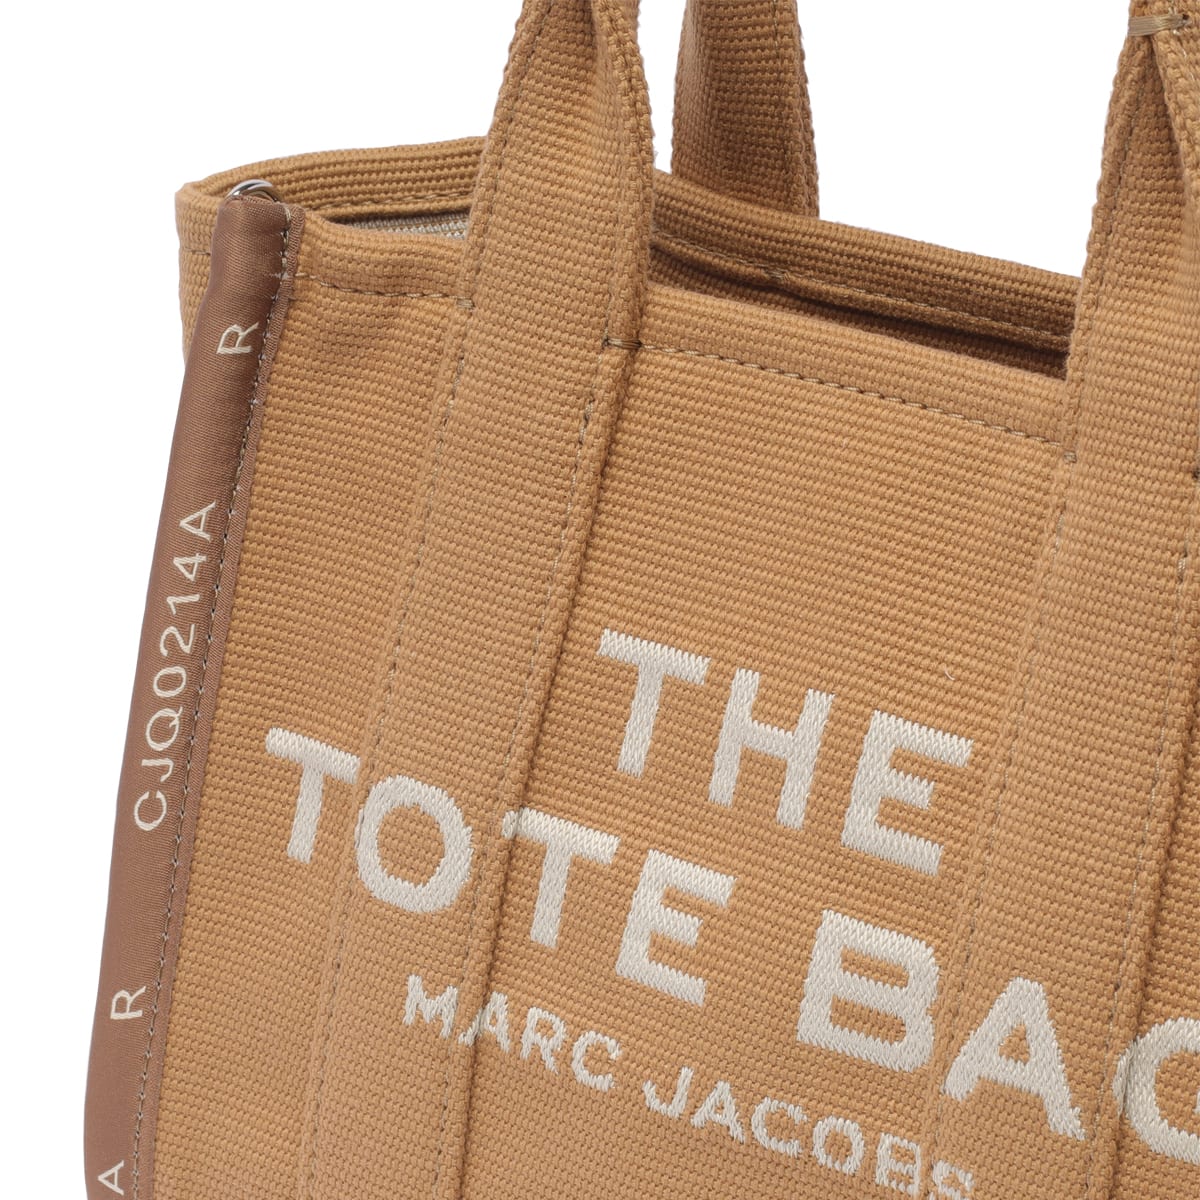 Shop Marc Jacobs The Mini Tote Bag